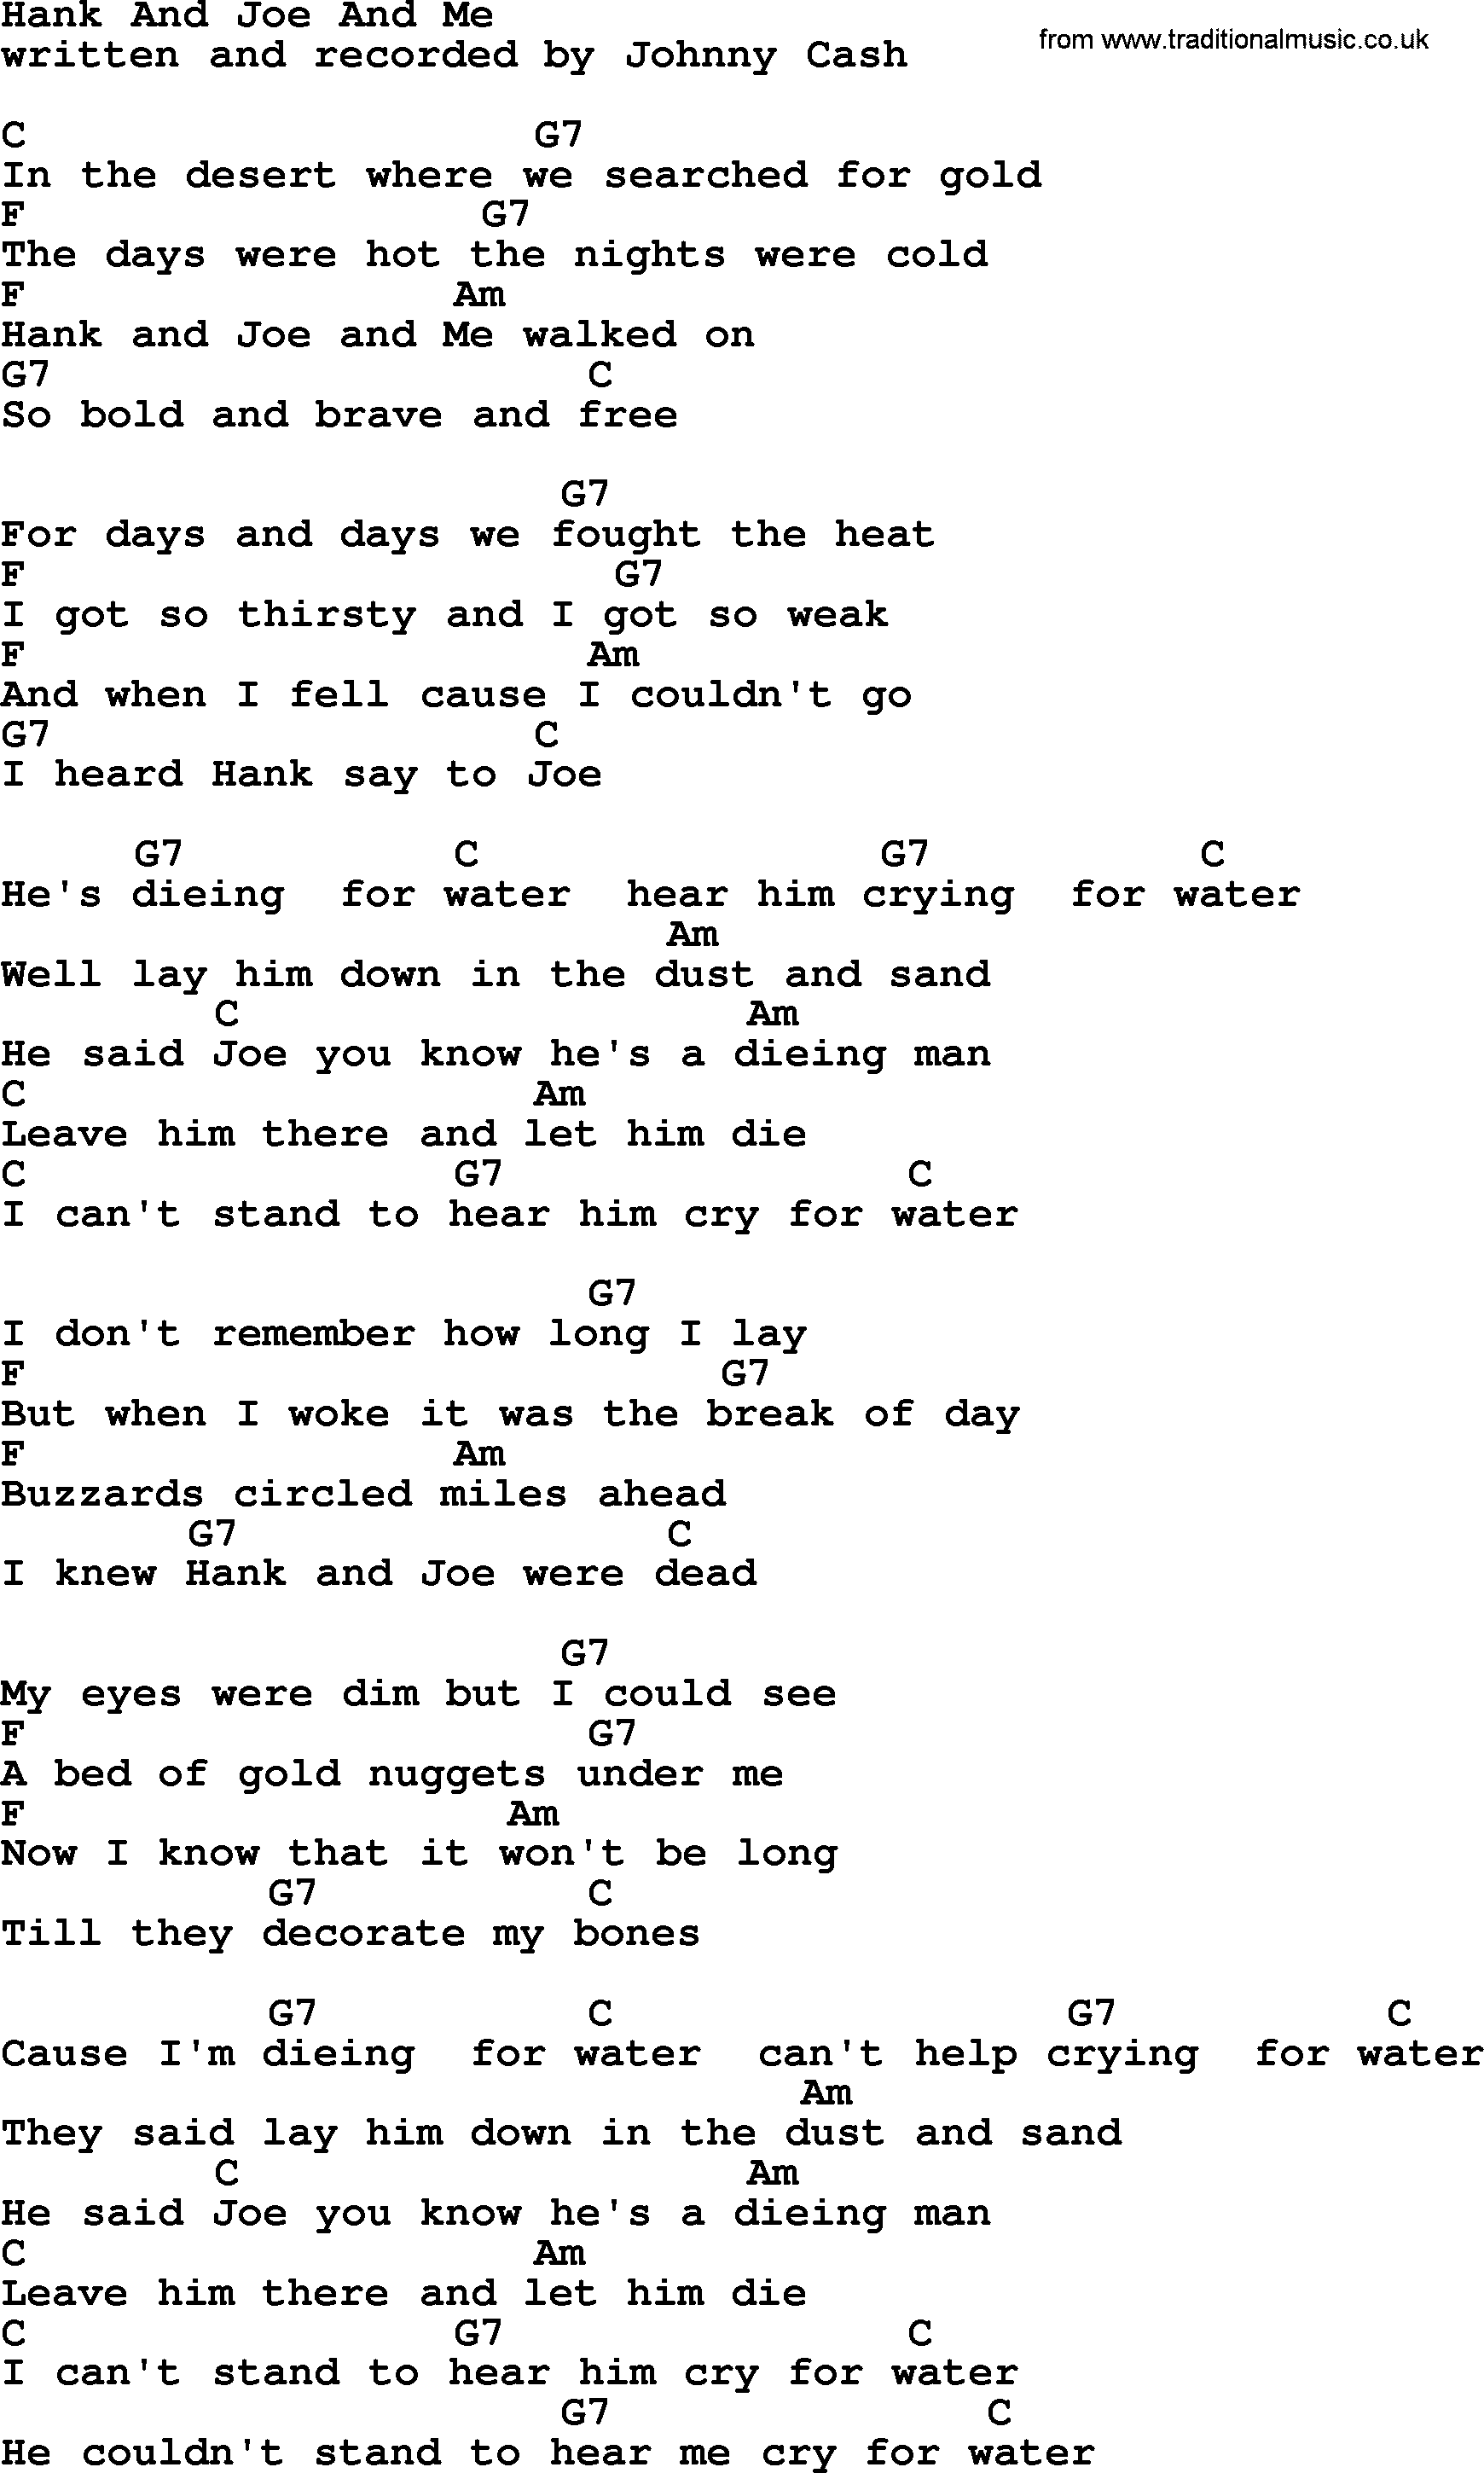 Johnny Cash song: Hank And Joe And Me, lyrics and chords